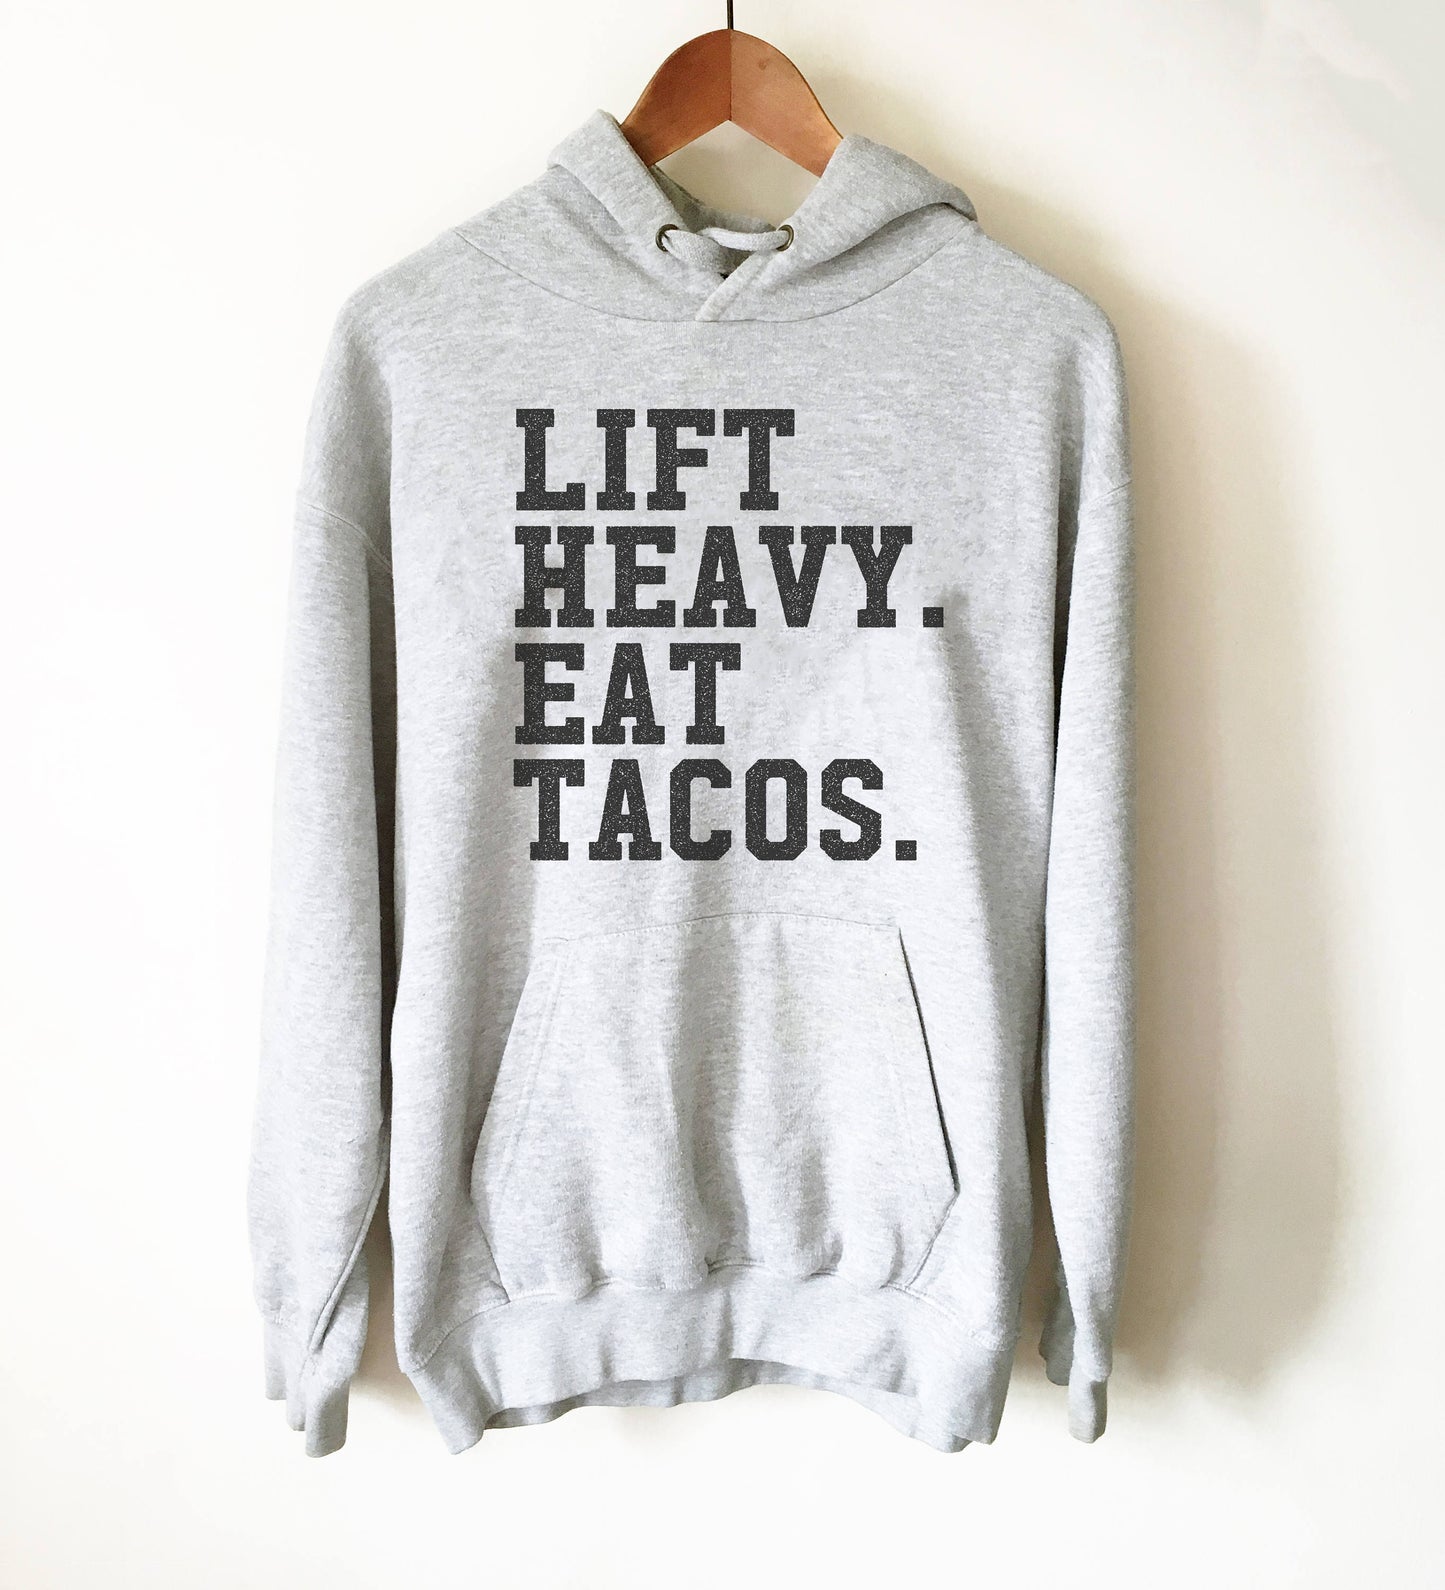 Lift Heavy Eat Tacos Hoodie - Taco shirt, Funny taco shirt, Fitness taco shirt, Taco shirts, Workout shirt, Gym Shirt